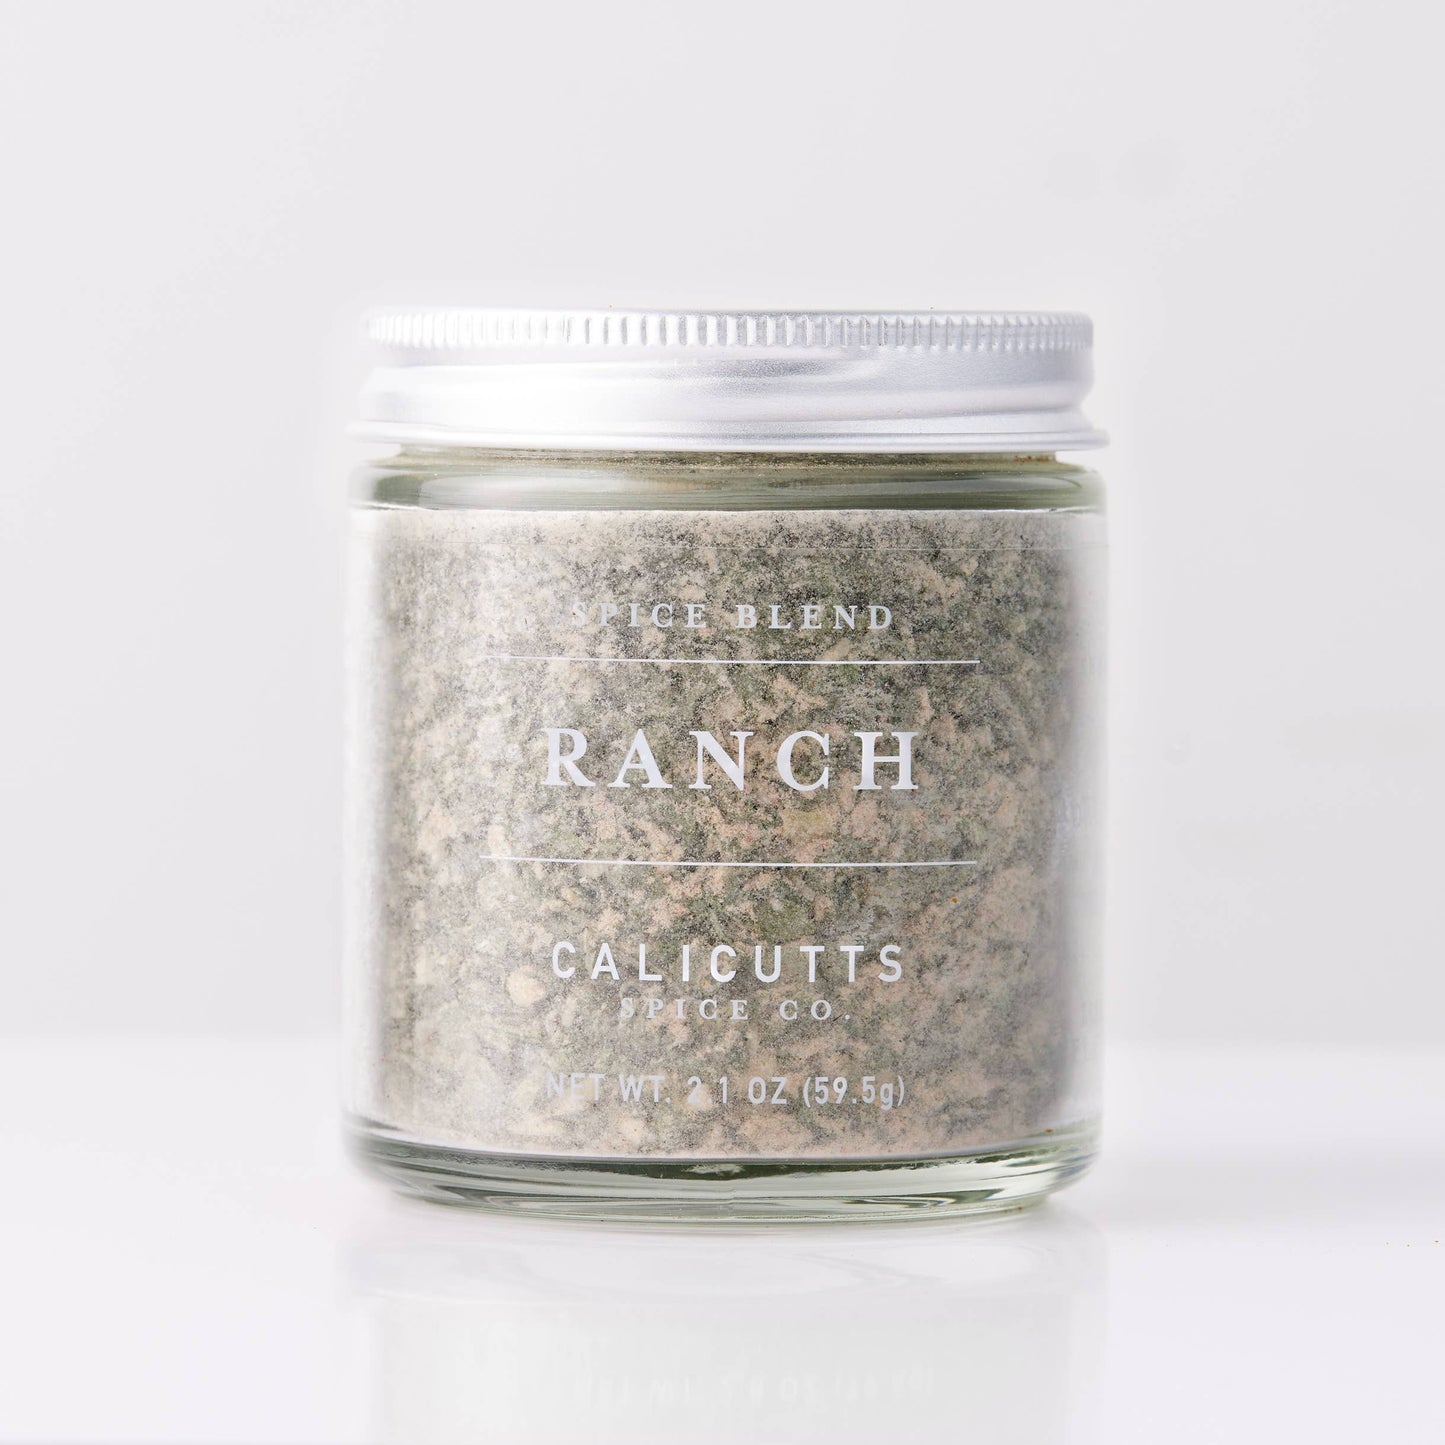 Ranch Spice Blend